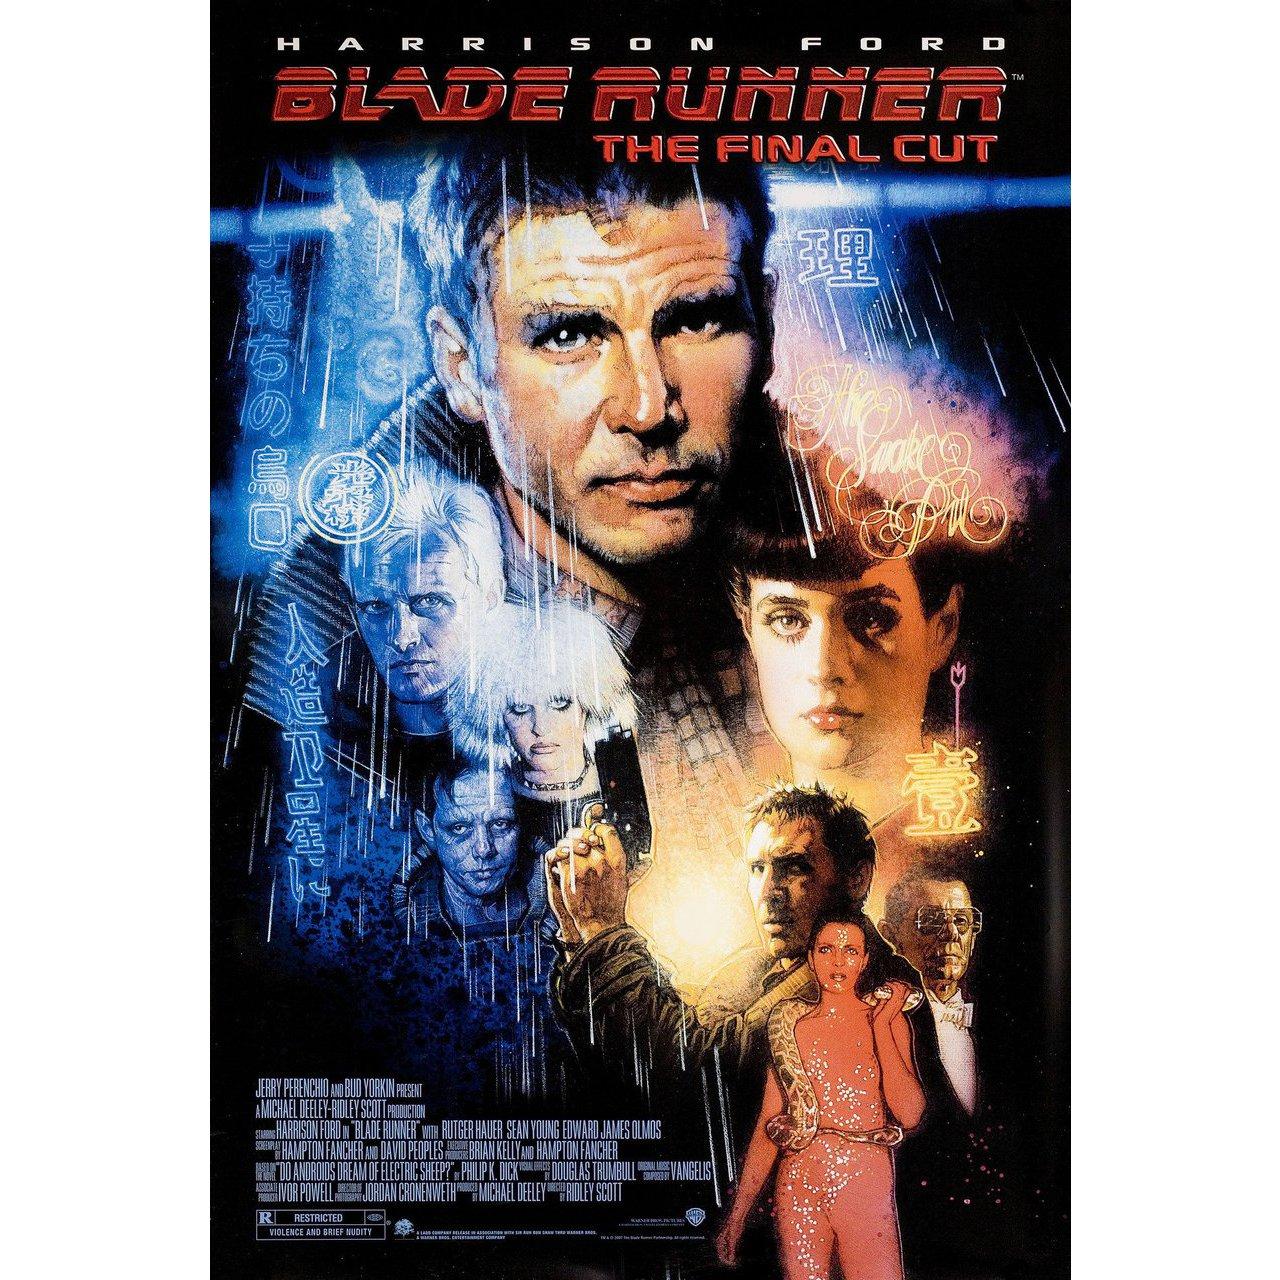 American 'Blade Runner' R2007 U.S. One Sheet Film Poster